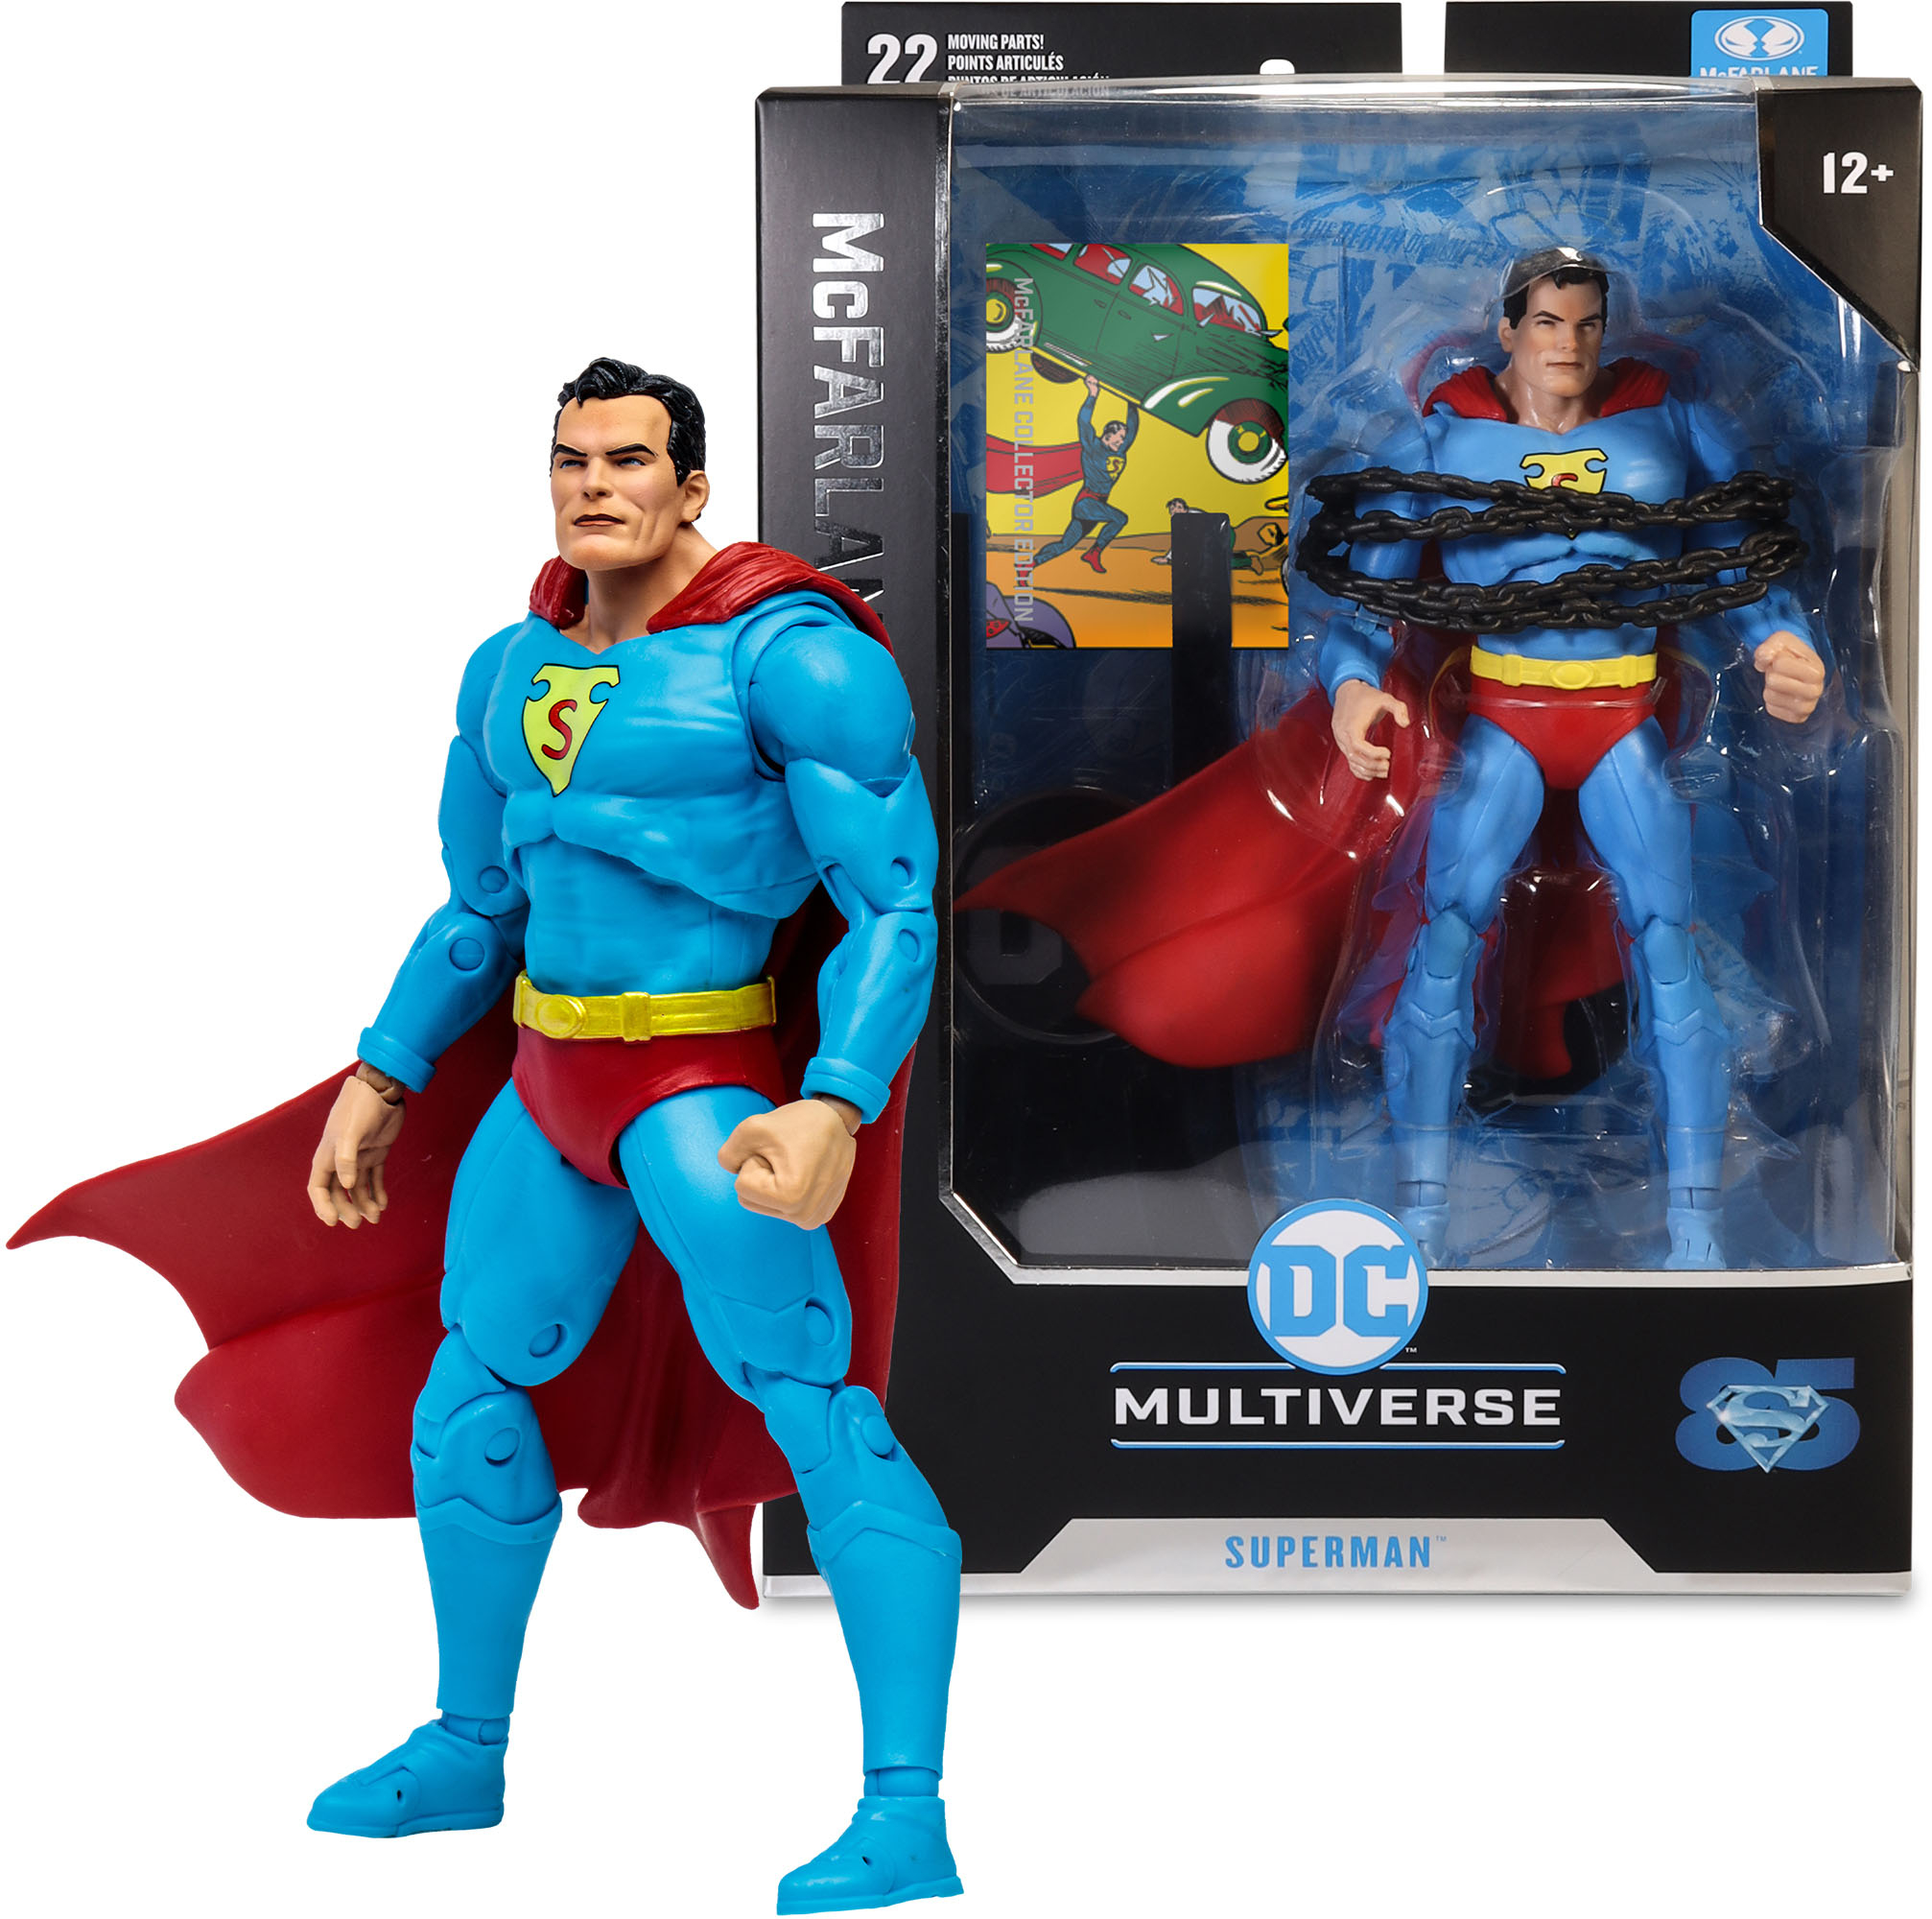 Superman Action Figures in DC Action Figures 